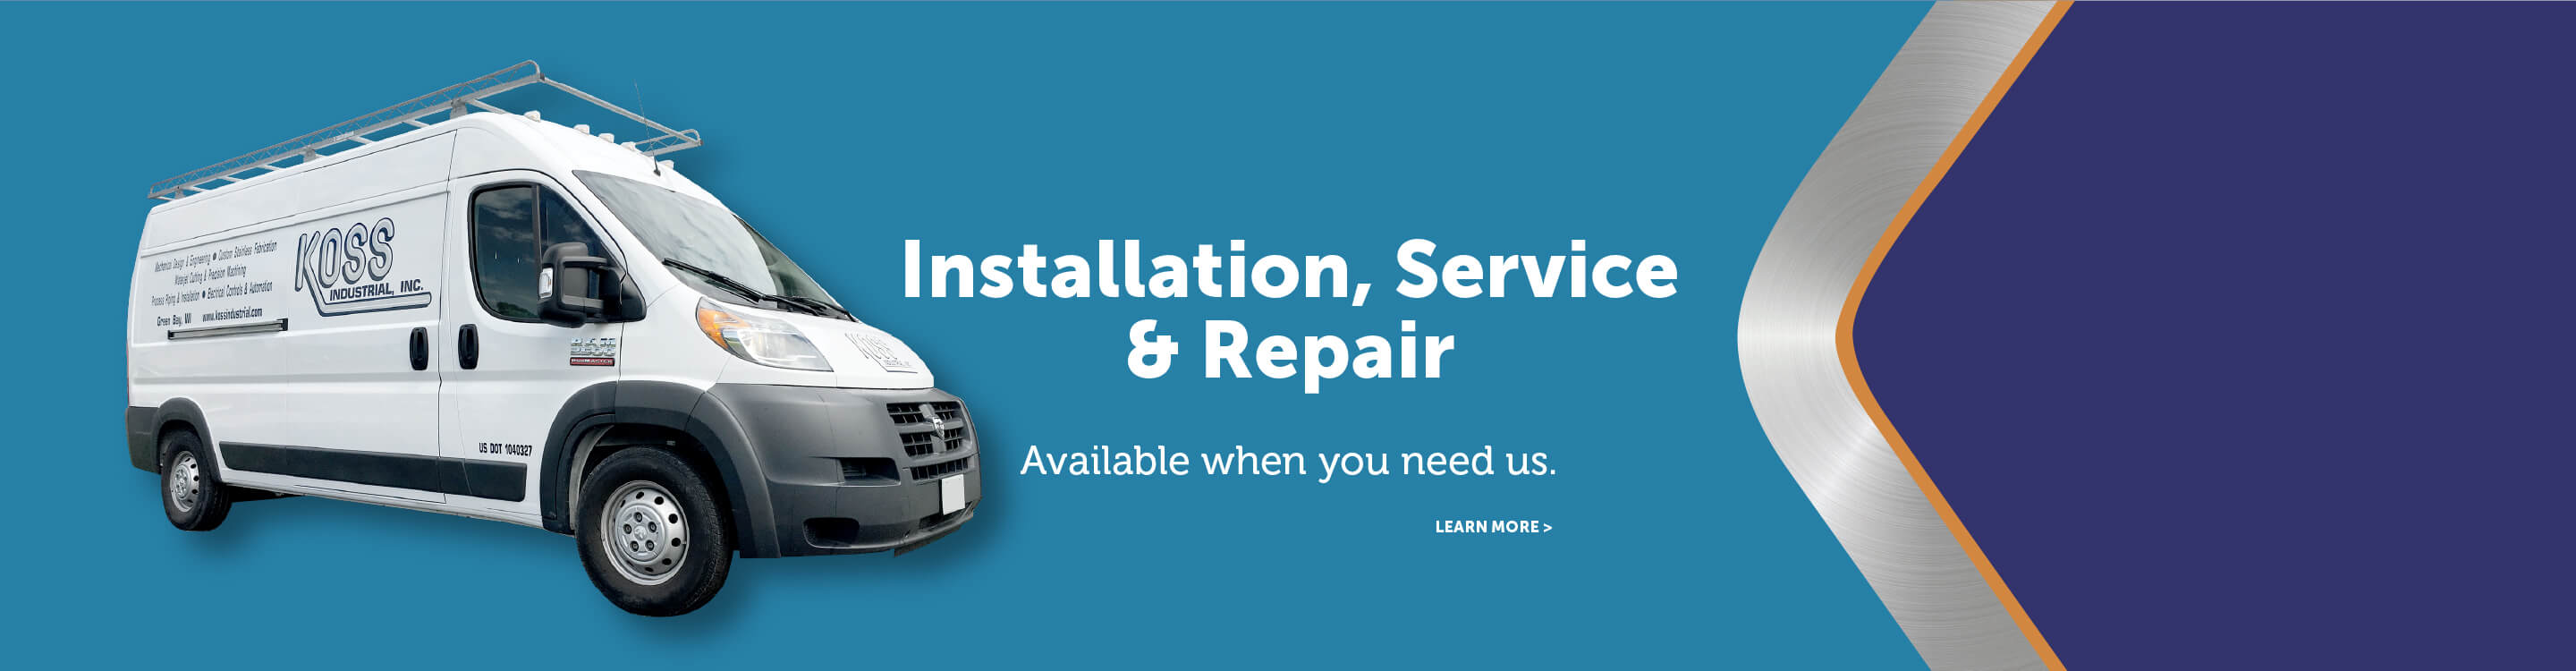 Koss Installation, Service & Repair